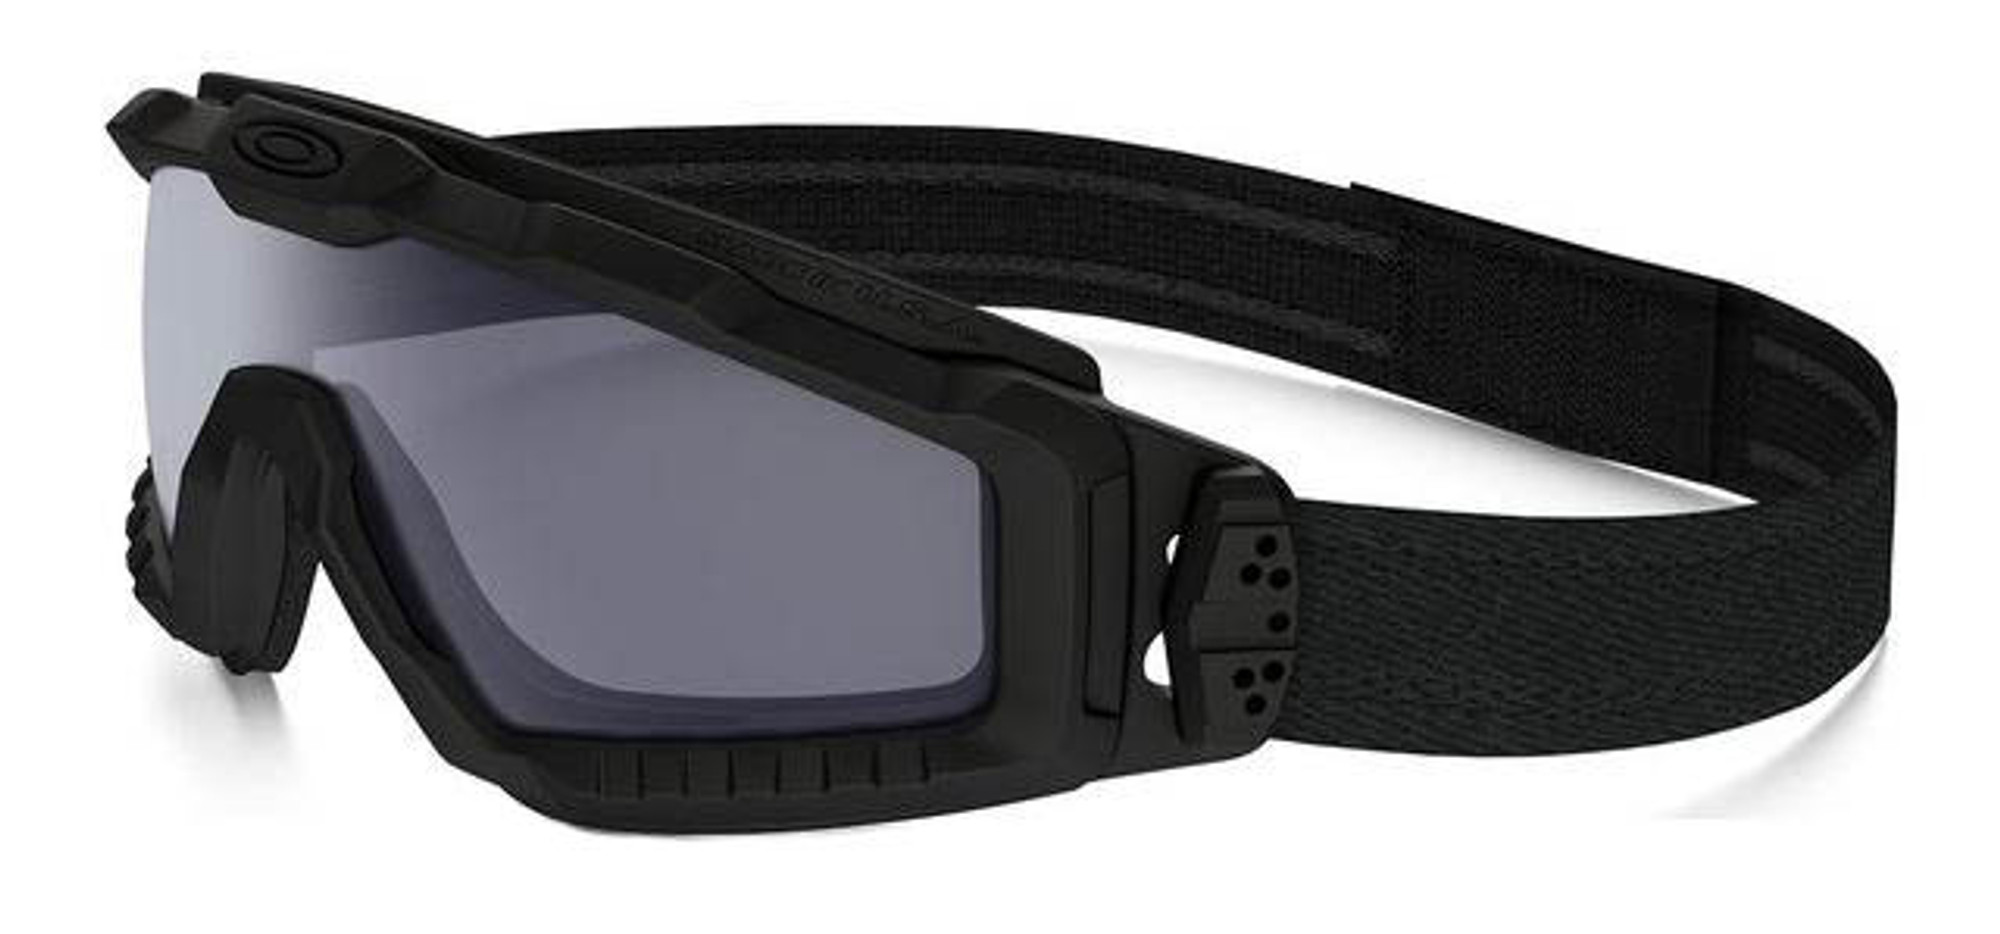 Oakley SI Ballistic ALPHA Halo Full Seal Goggle - Matte Black with Grey Lens